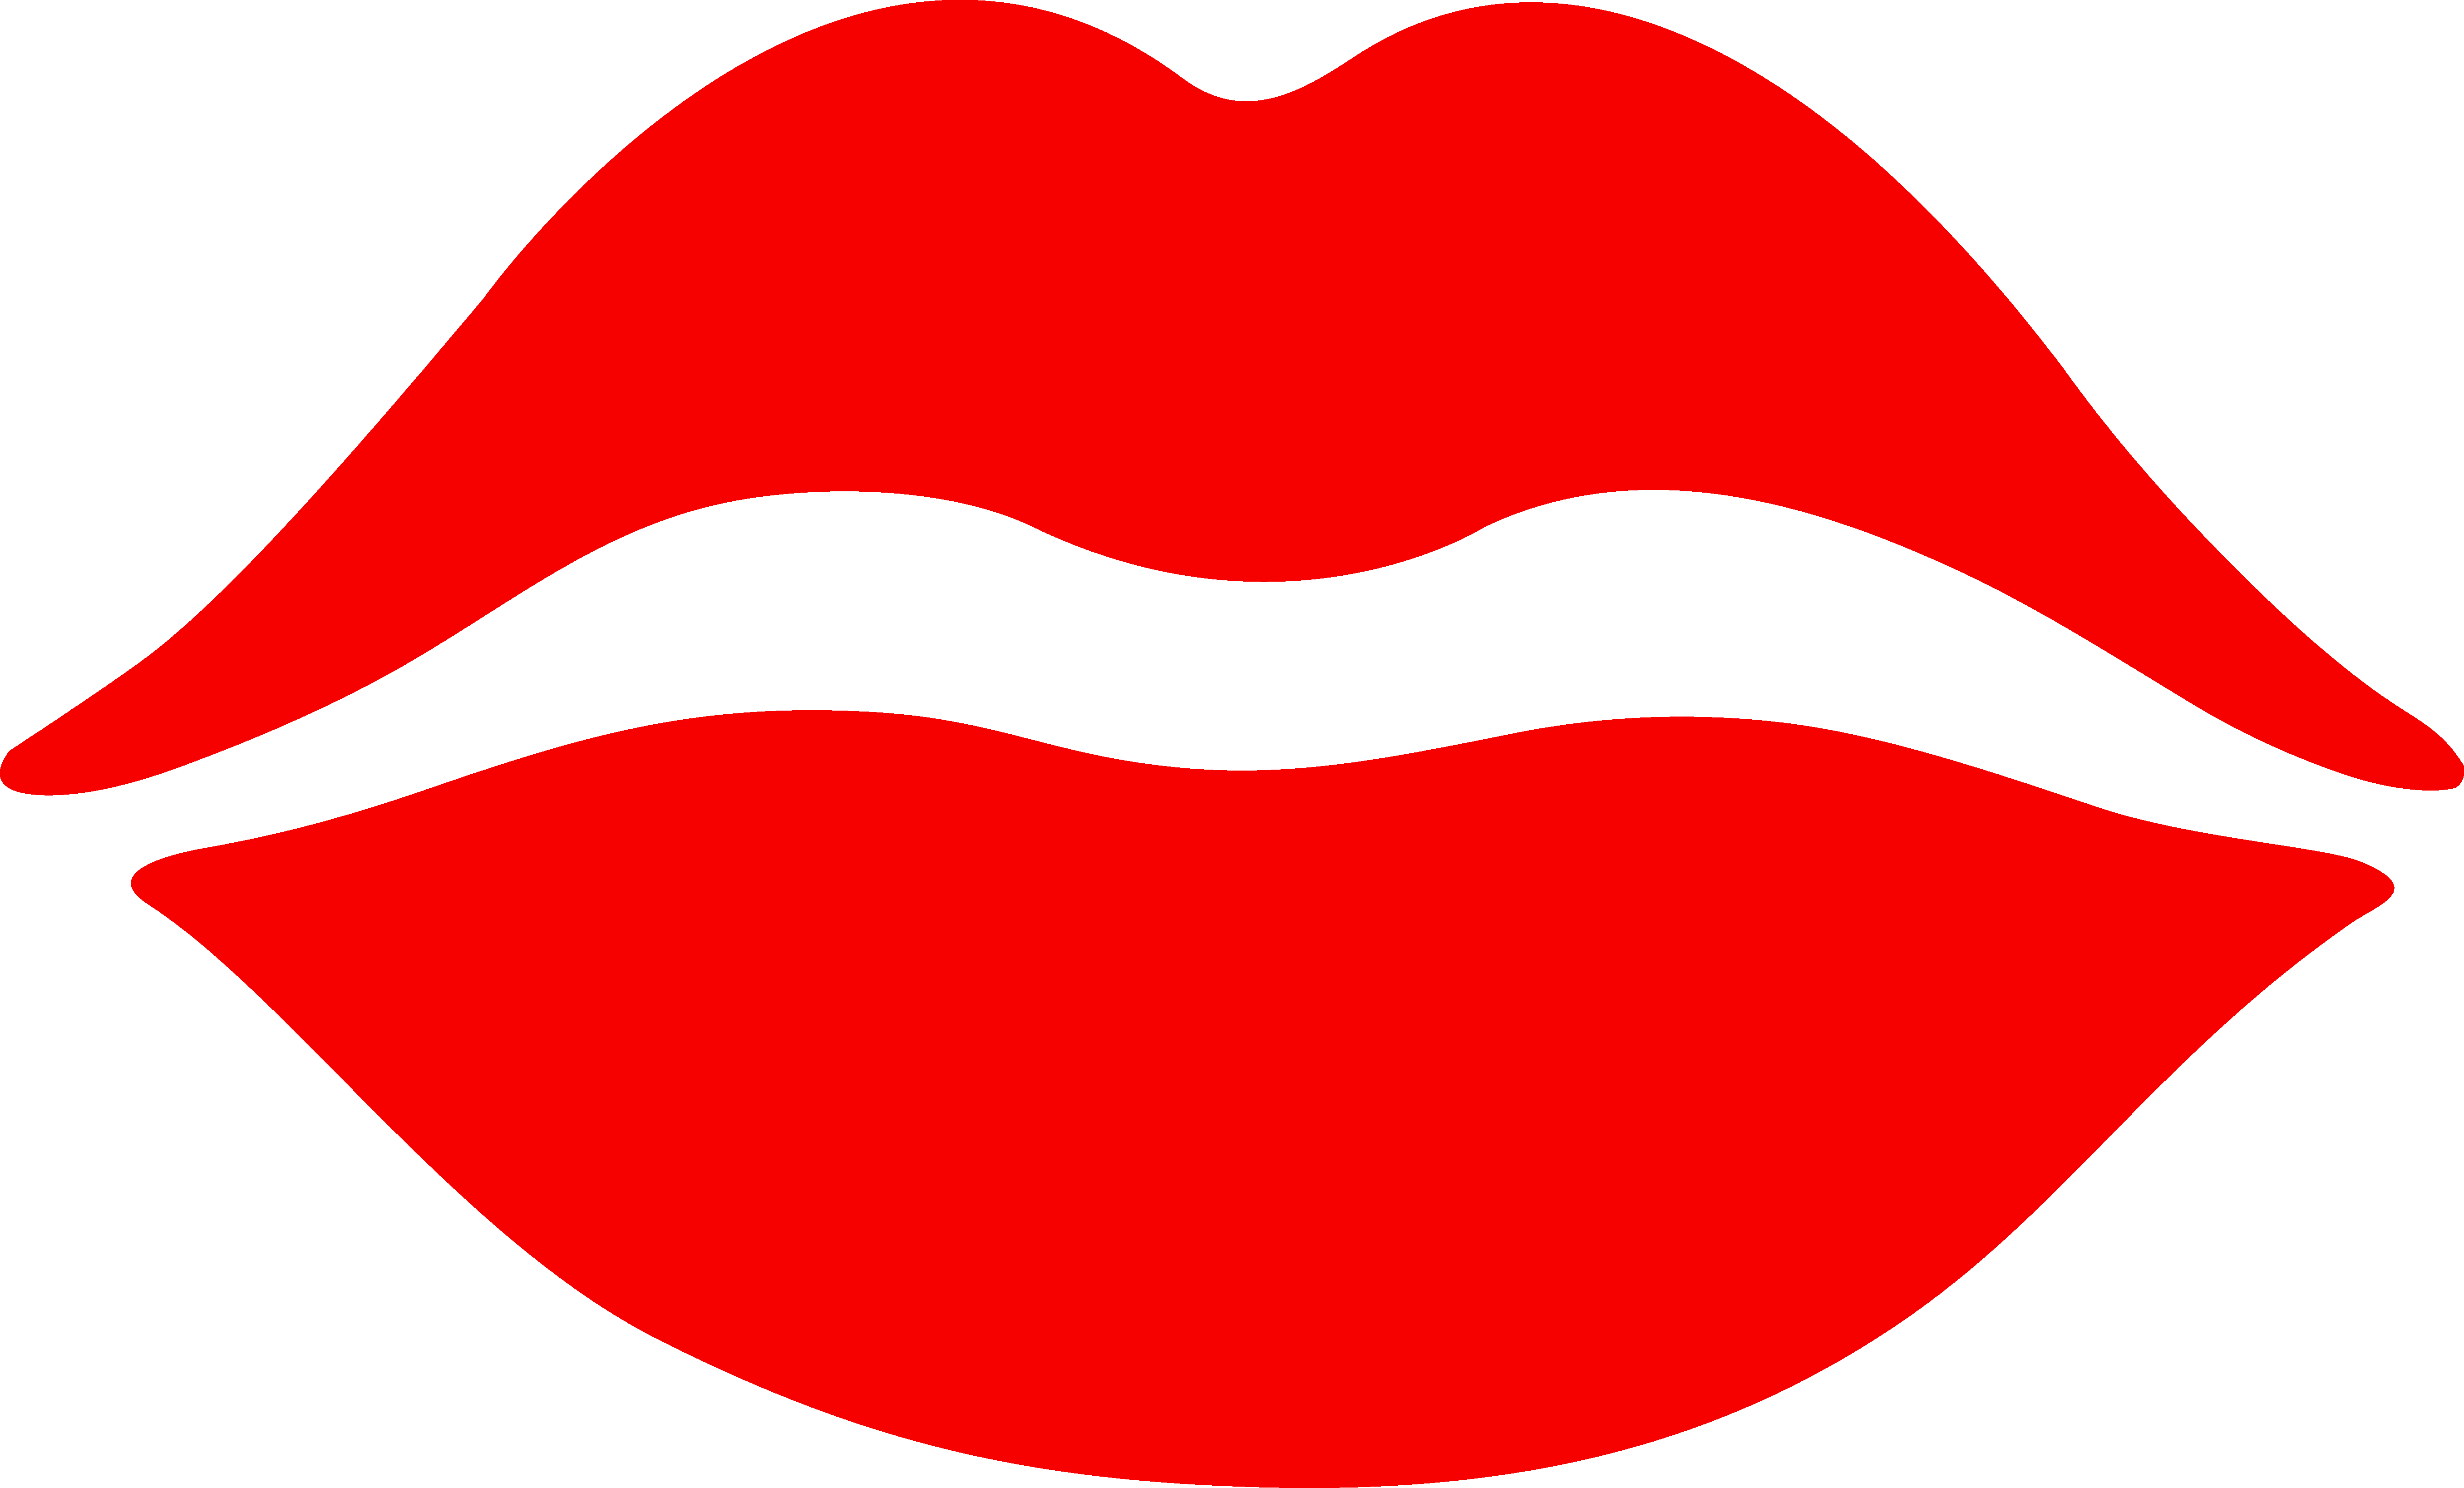 Red Lips Art - ClipArt Best